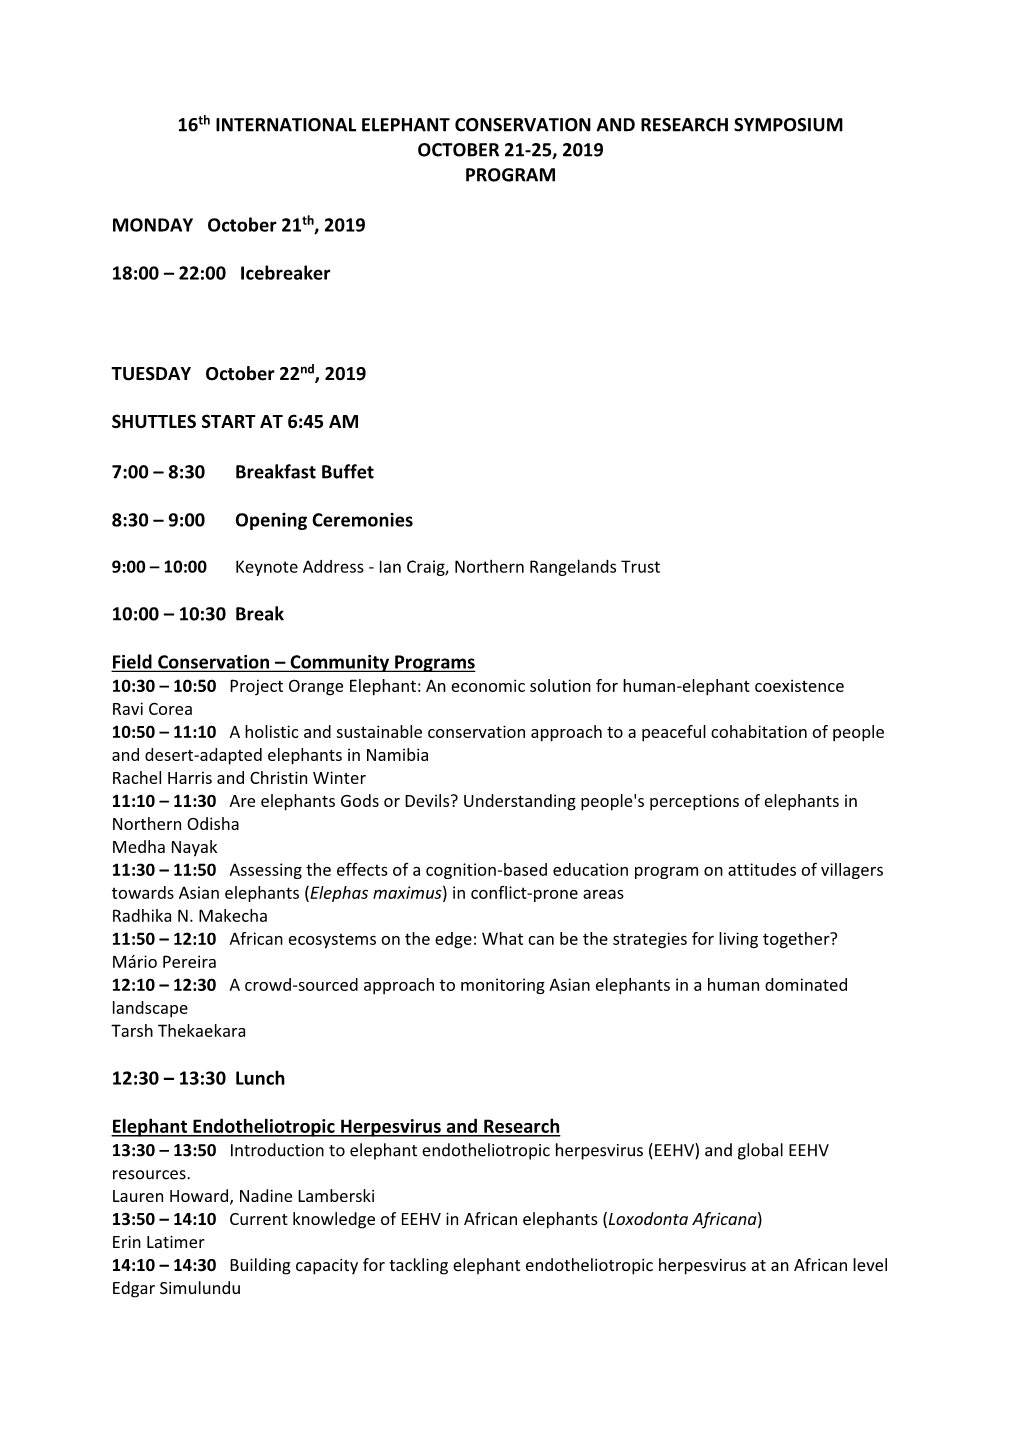 IEF Symposium Program Information